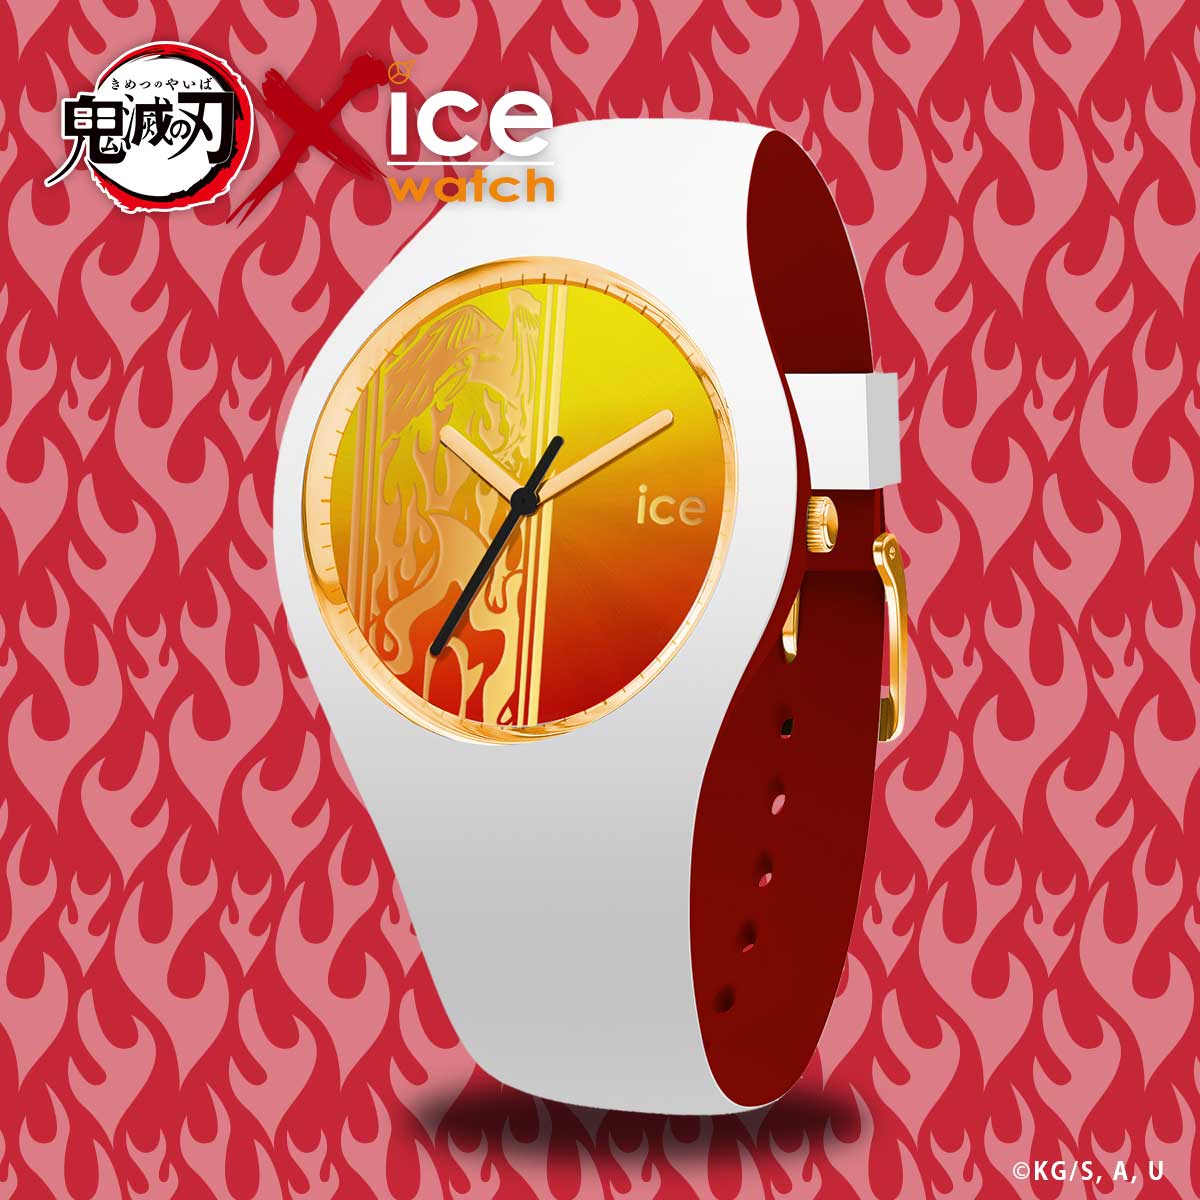 ice watch TVアニメ「鬼滅の刃」 × ICE WATCH コラボレーション